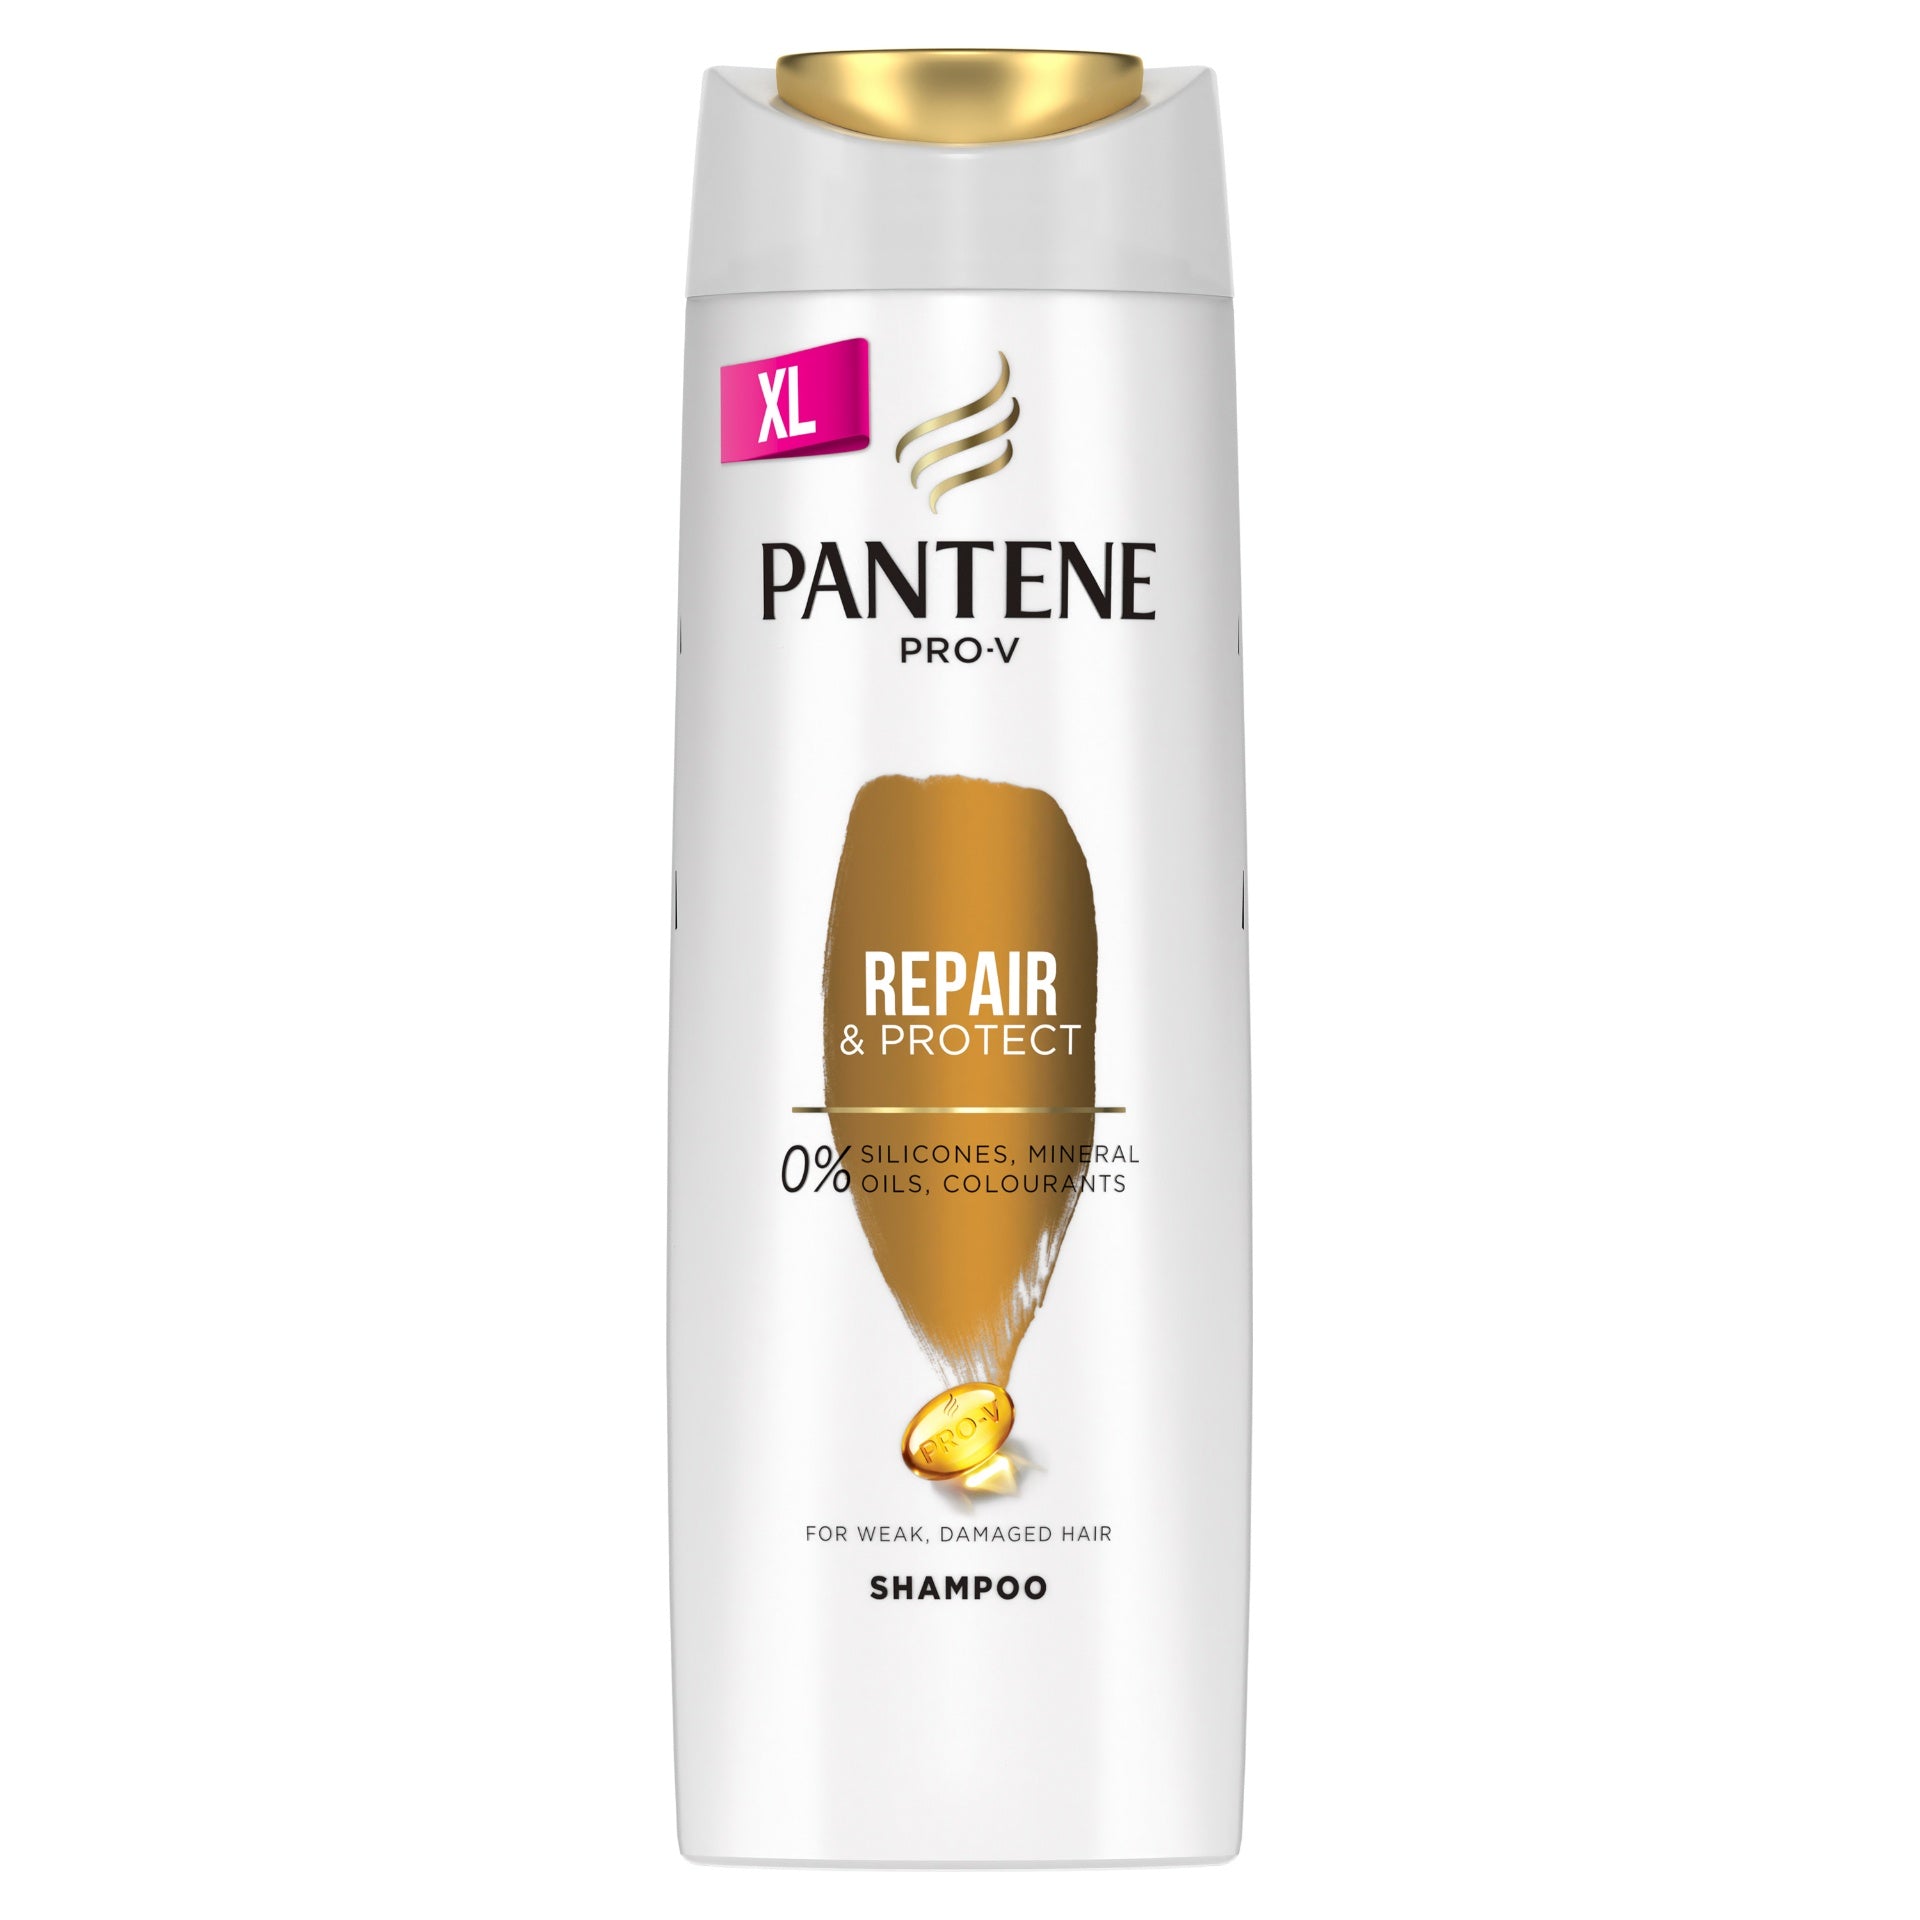 Pantene Shampoo - Repair & Protect 500ml*